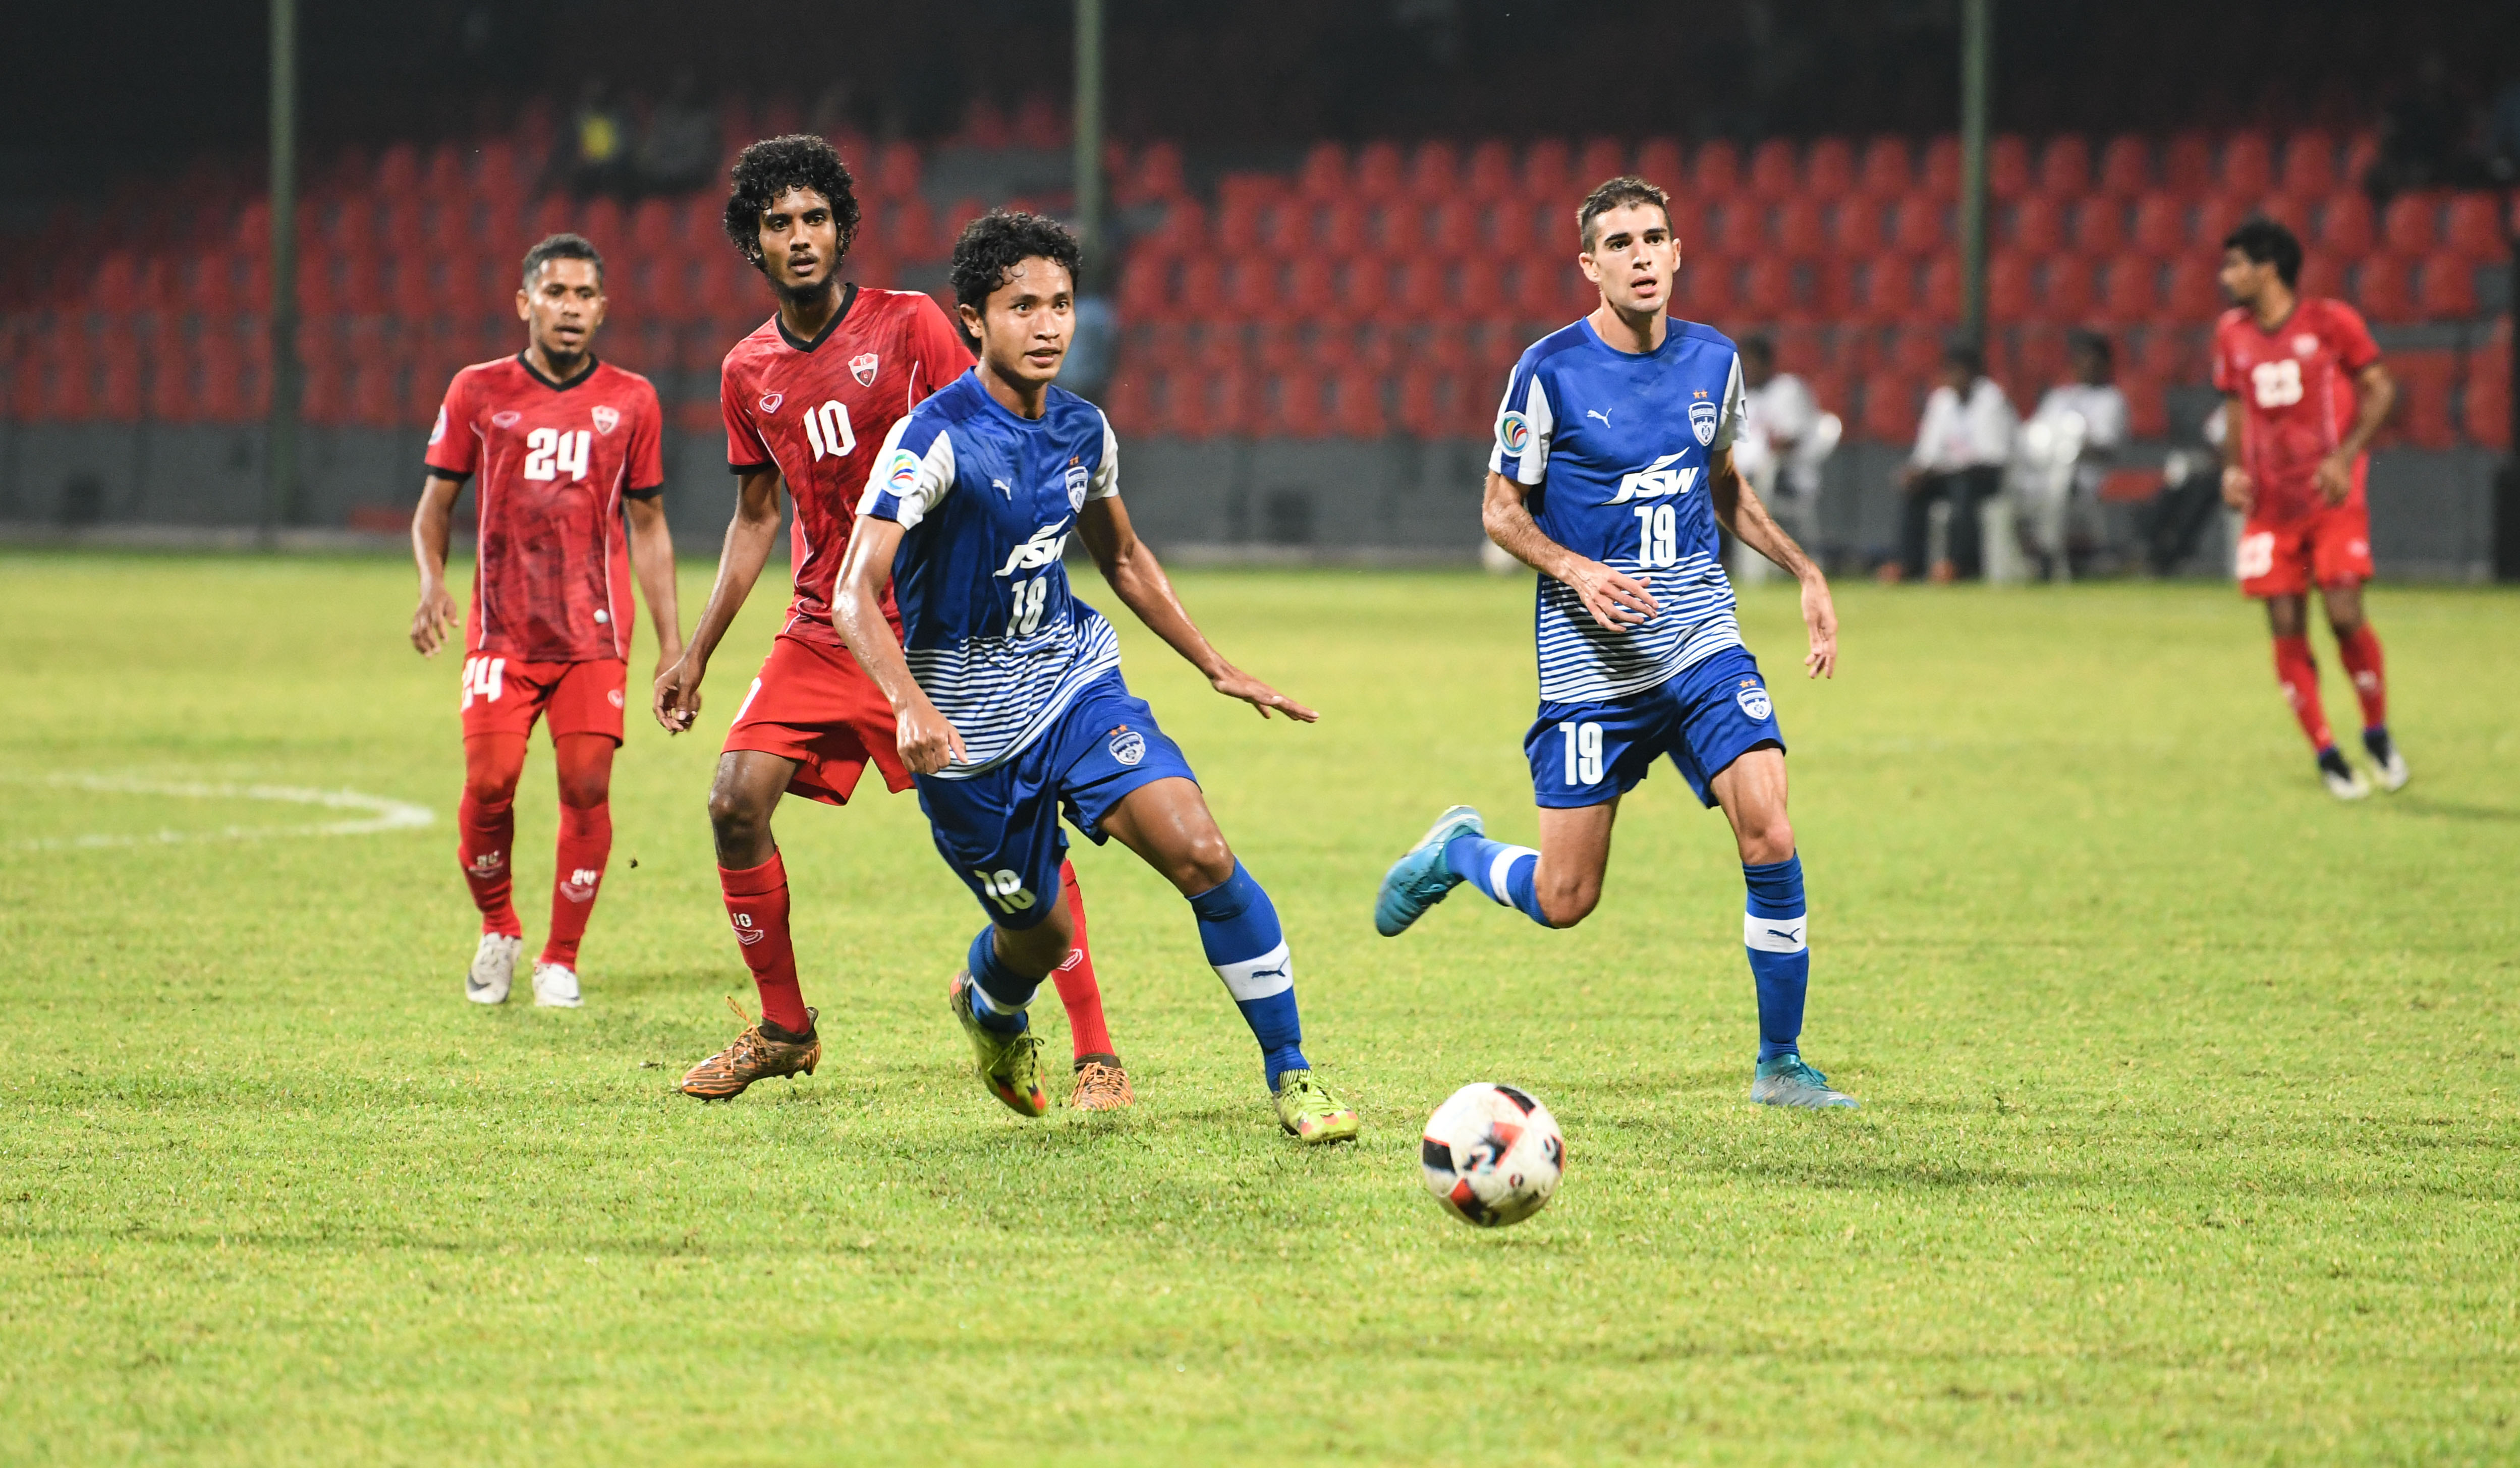 Thongkhosiem Haokip’s second-half stunner wins it for Bengaluru in Maldives